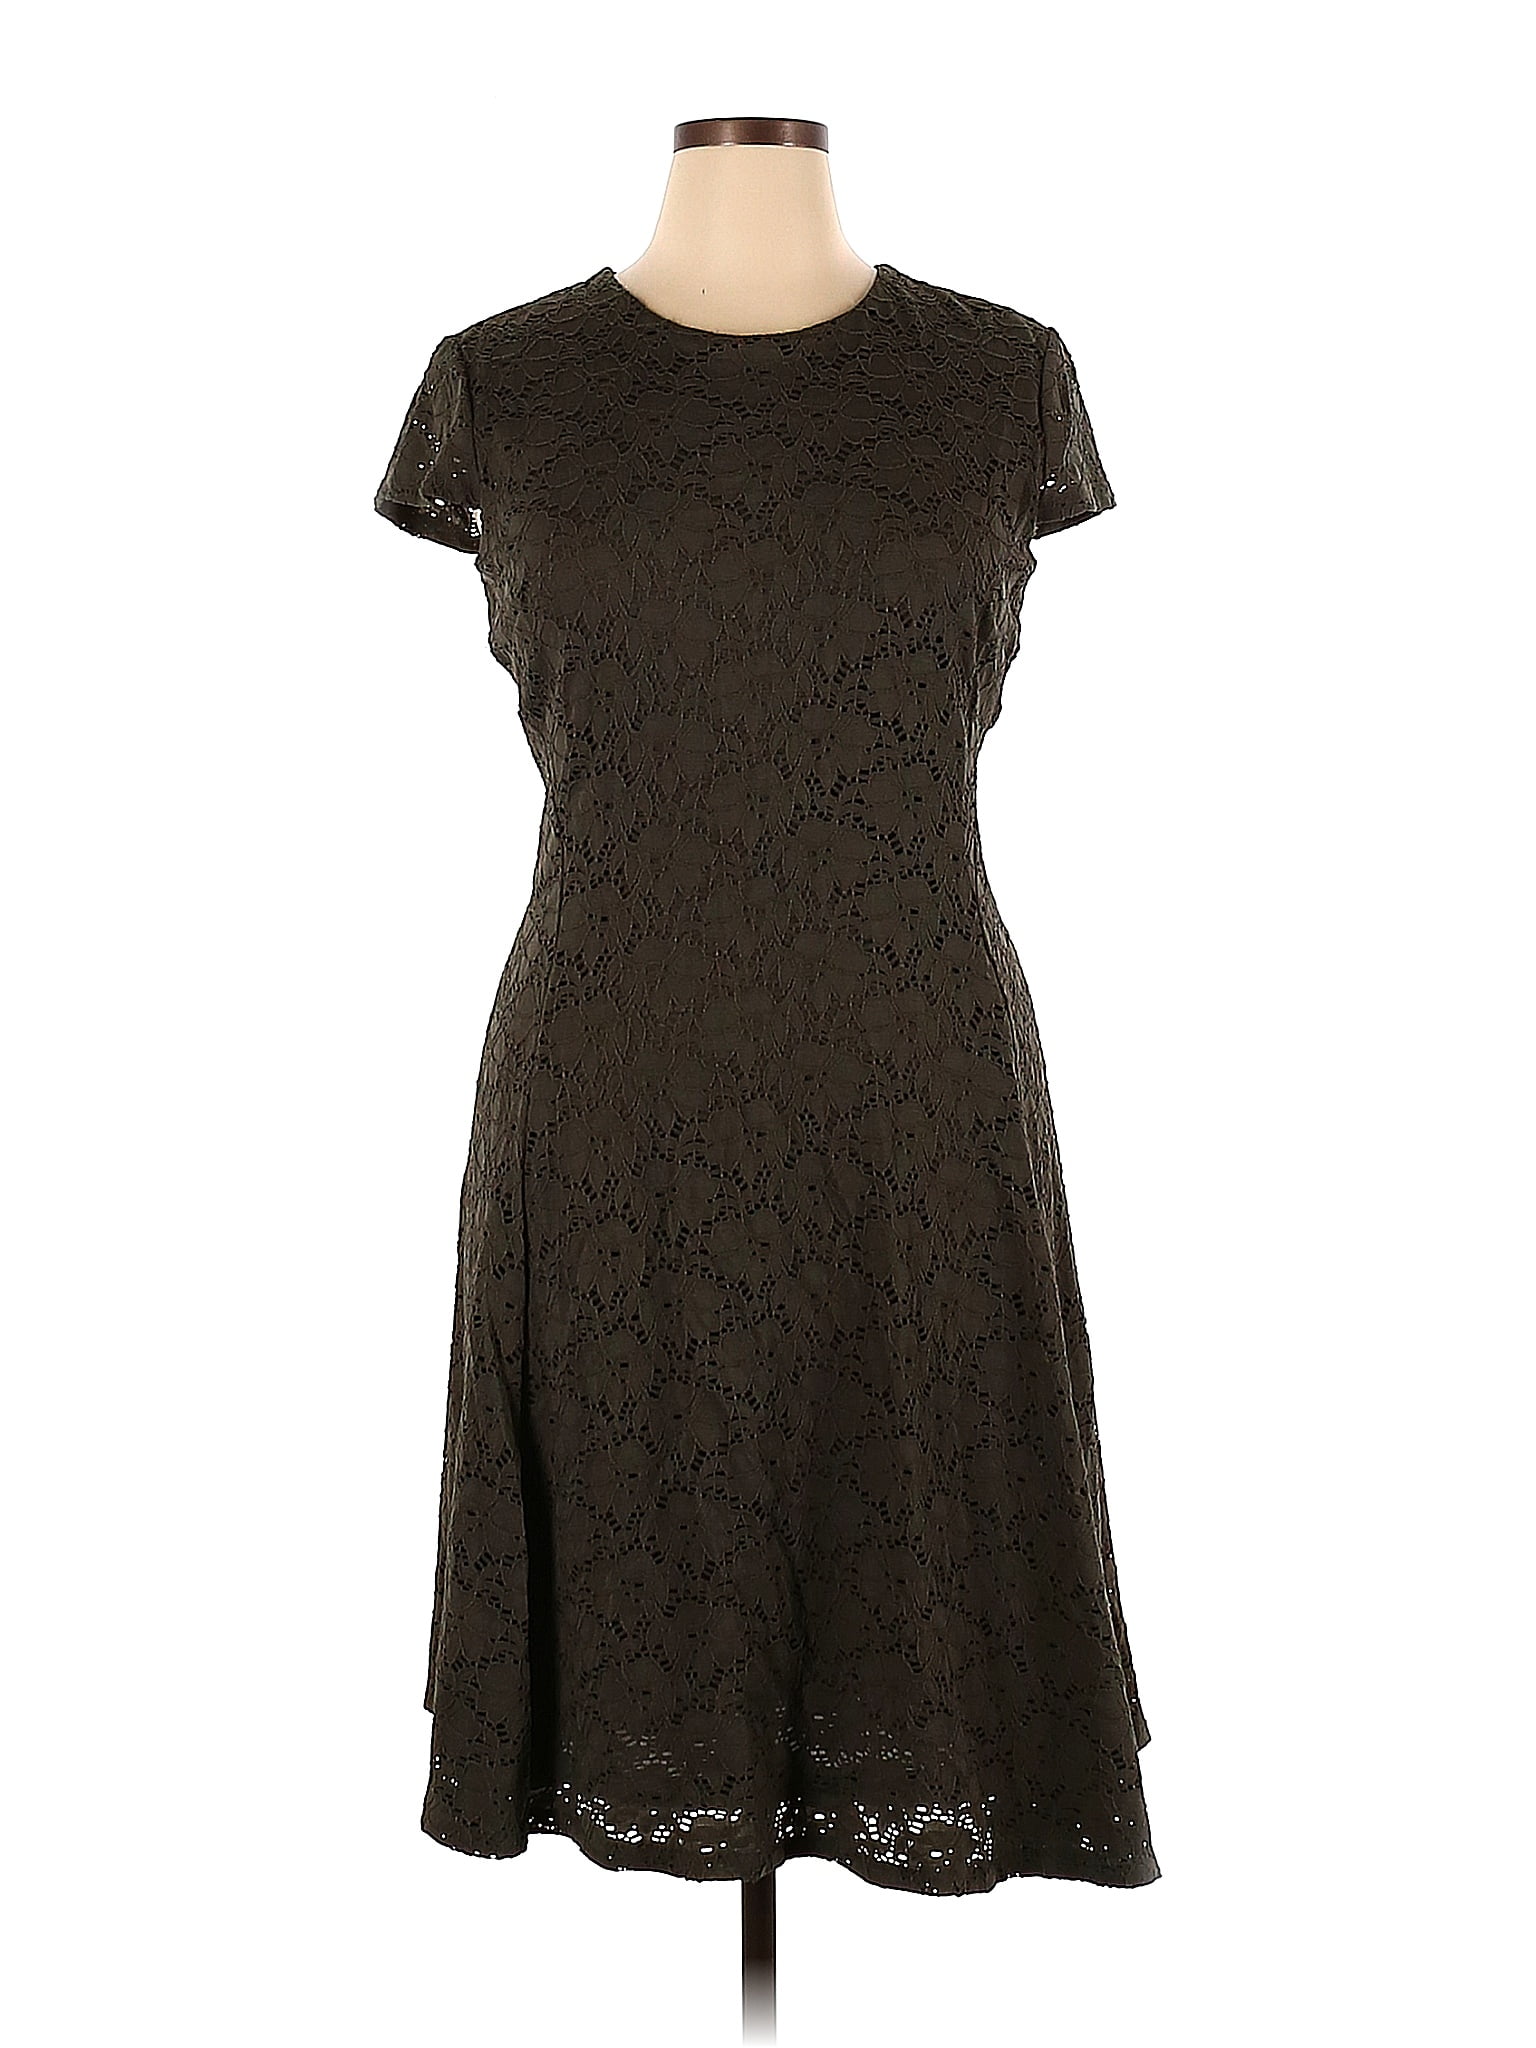 Alfani Solid Brown Casual Dress Size 16 - 68% off | thredUP